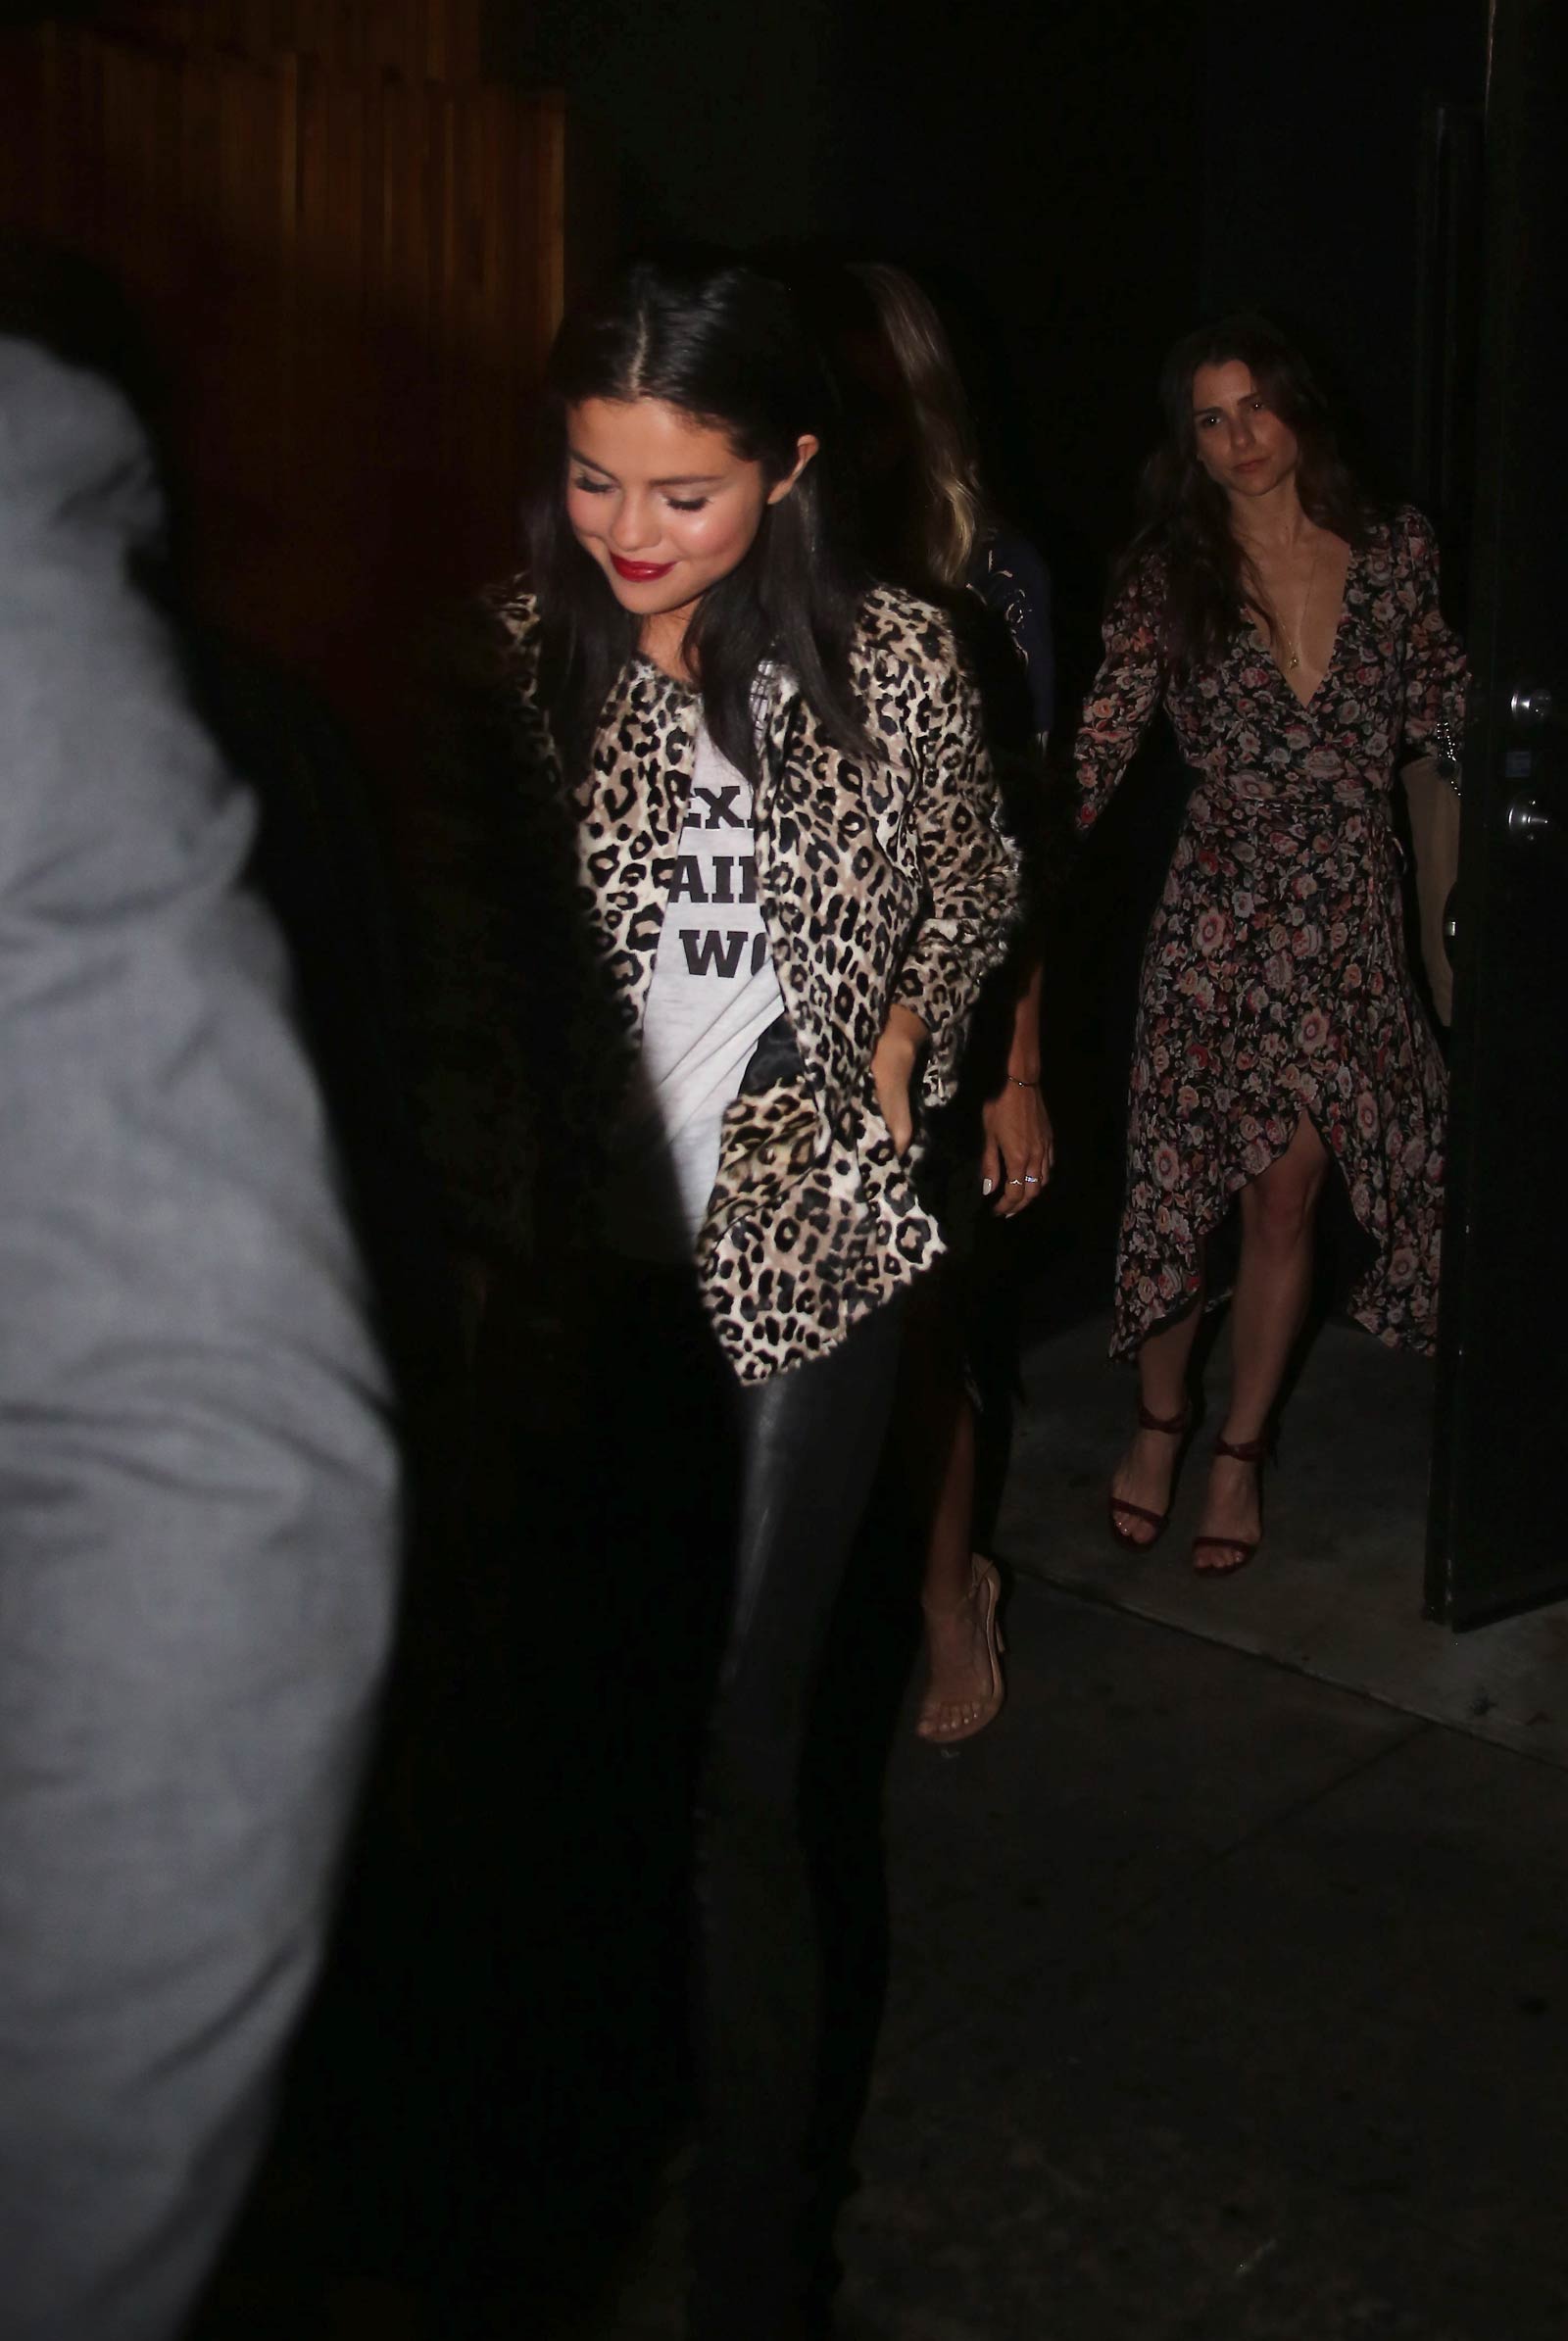 Selena Gomez & Francia Raisa leaving The Nice Guy Restaurant